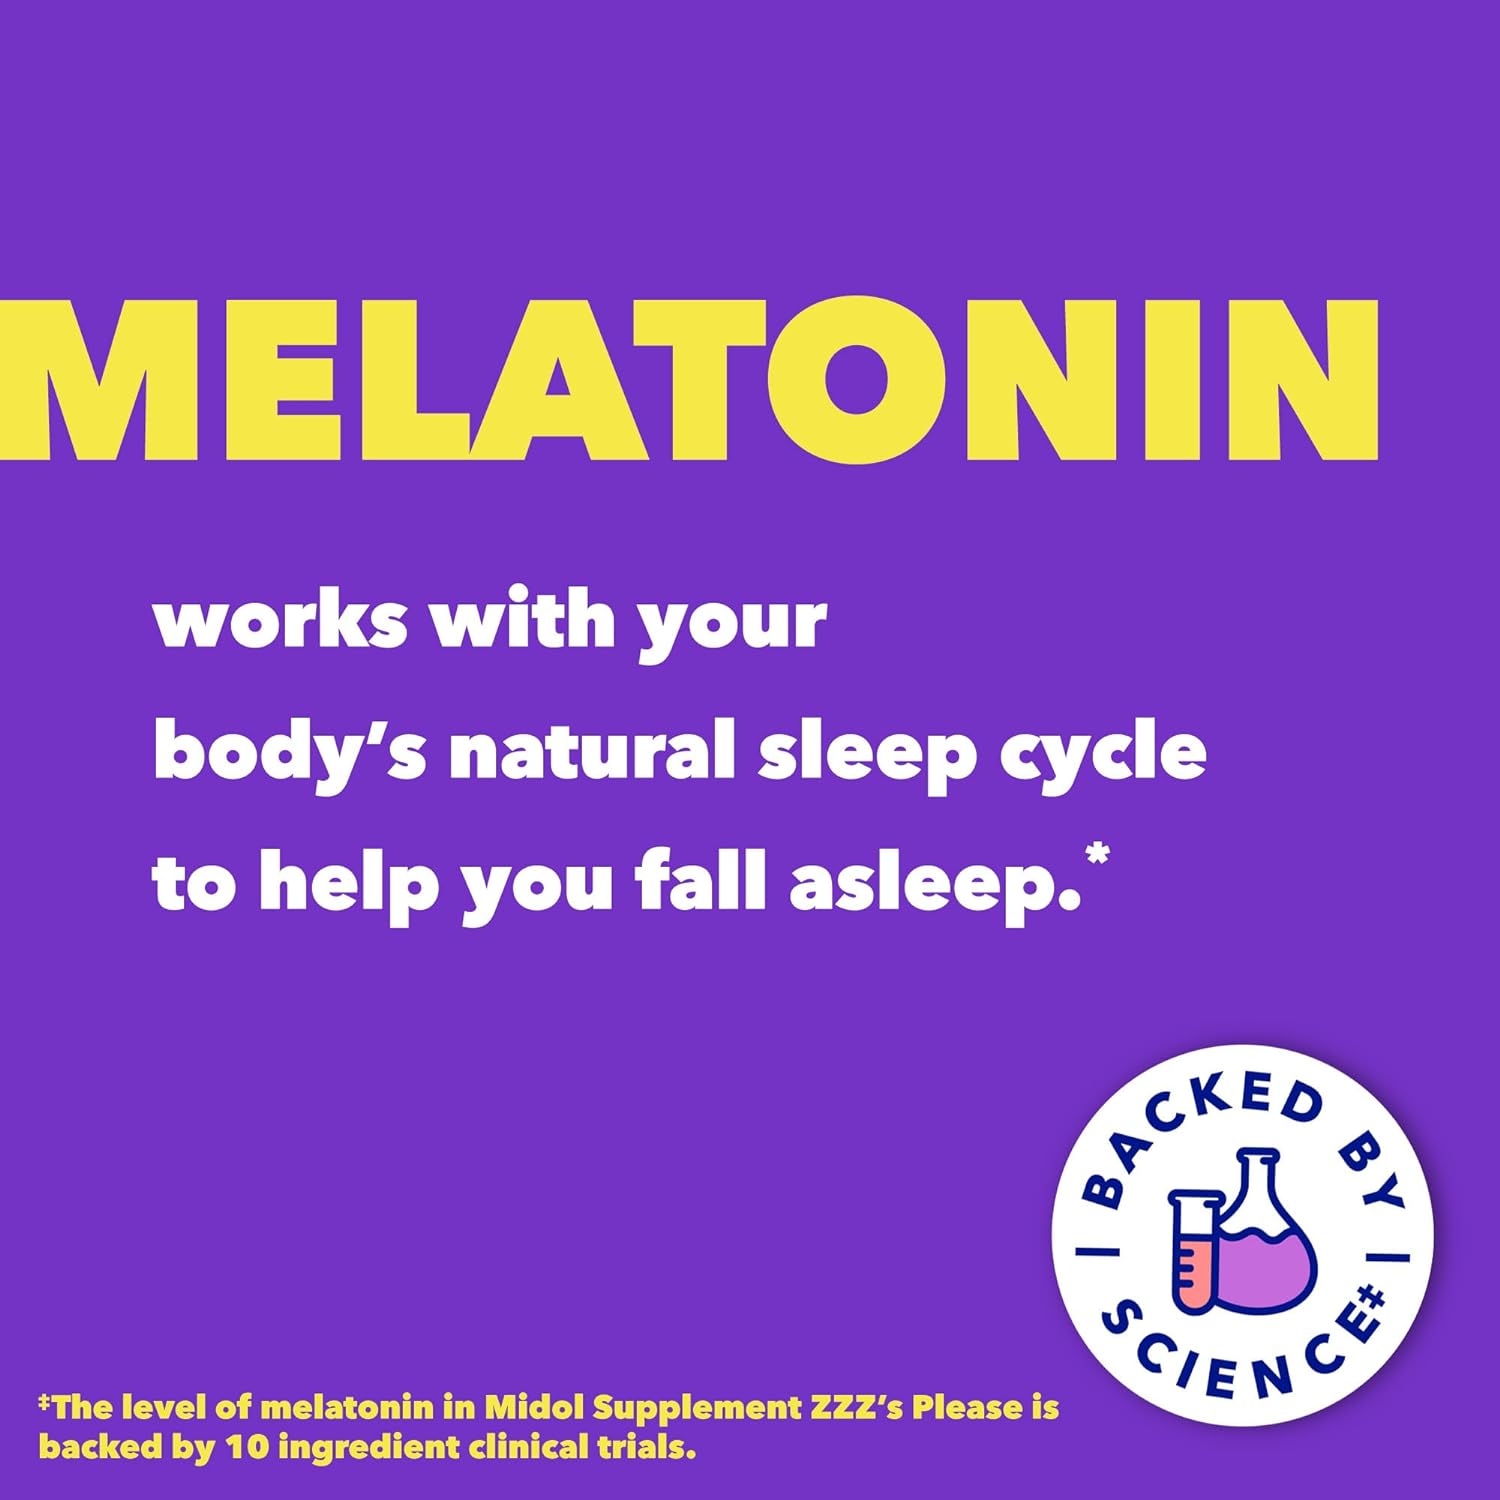 Midol Supplements ZZZ’s Please, 1 mg Melatonin Capsule, Sleep Supplement for Adults, Formulated with Melatonin and Passionflower, Sleep Supplements for Better Sleep, 30 Count : Health & Household